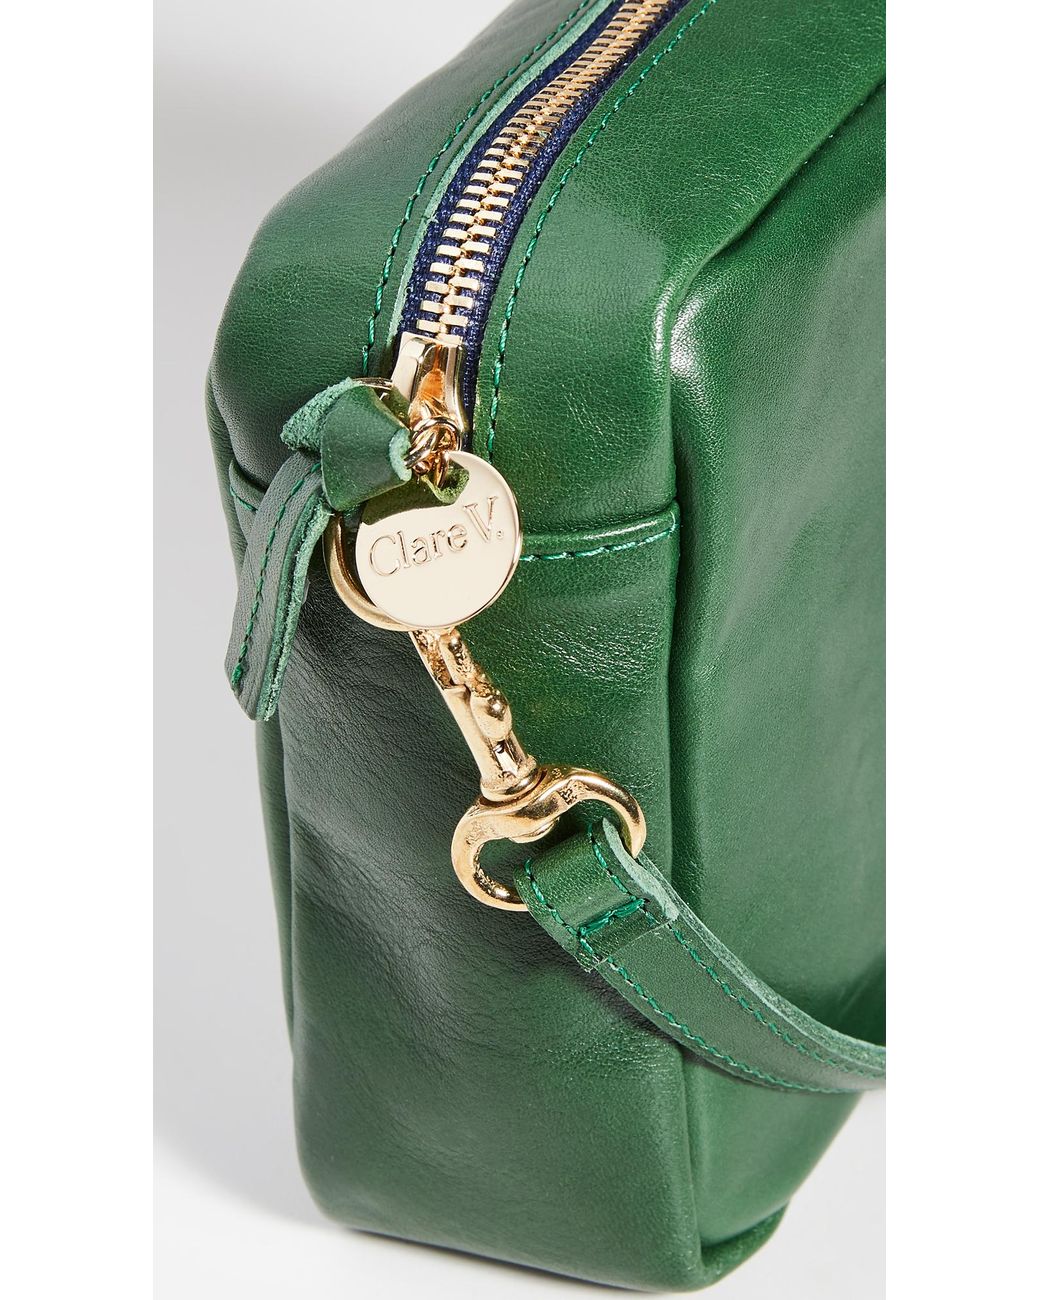 Clare V, Bags, Clare V Green Croc Midi Sac Crossbody Bag Long Short Strap  Euc